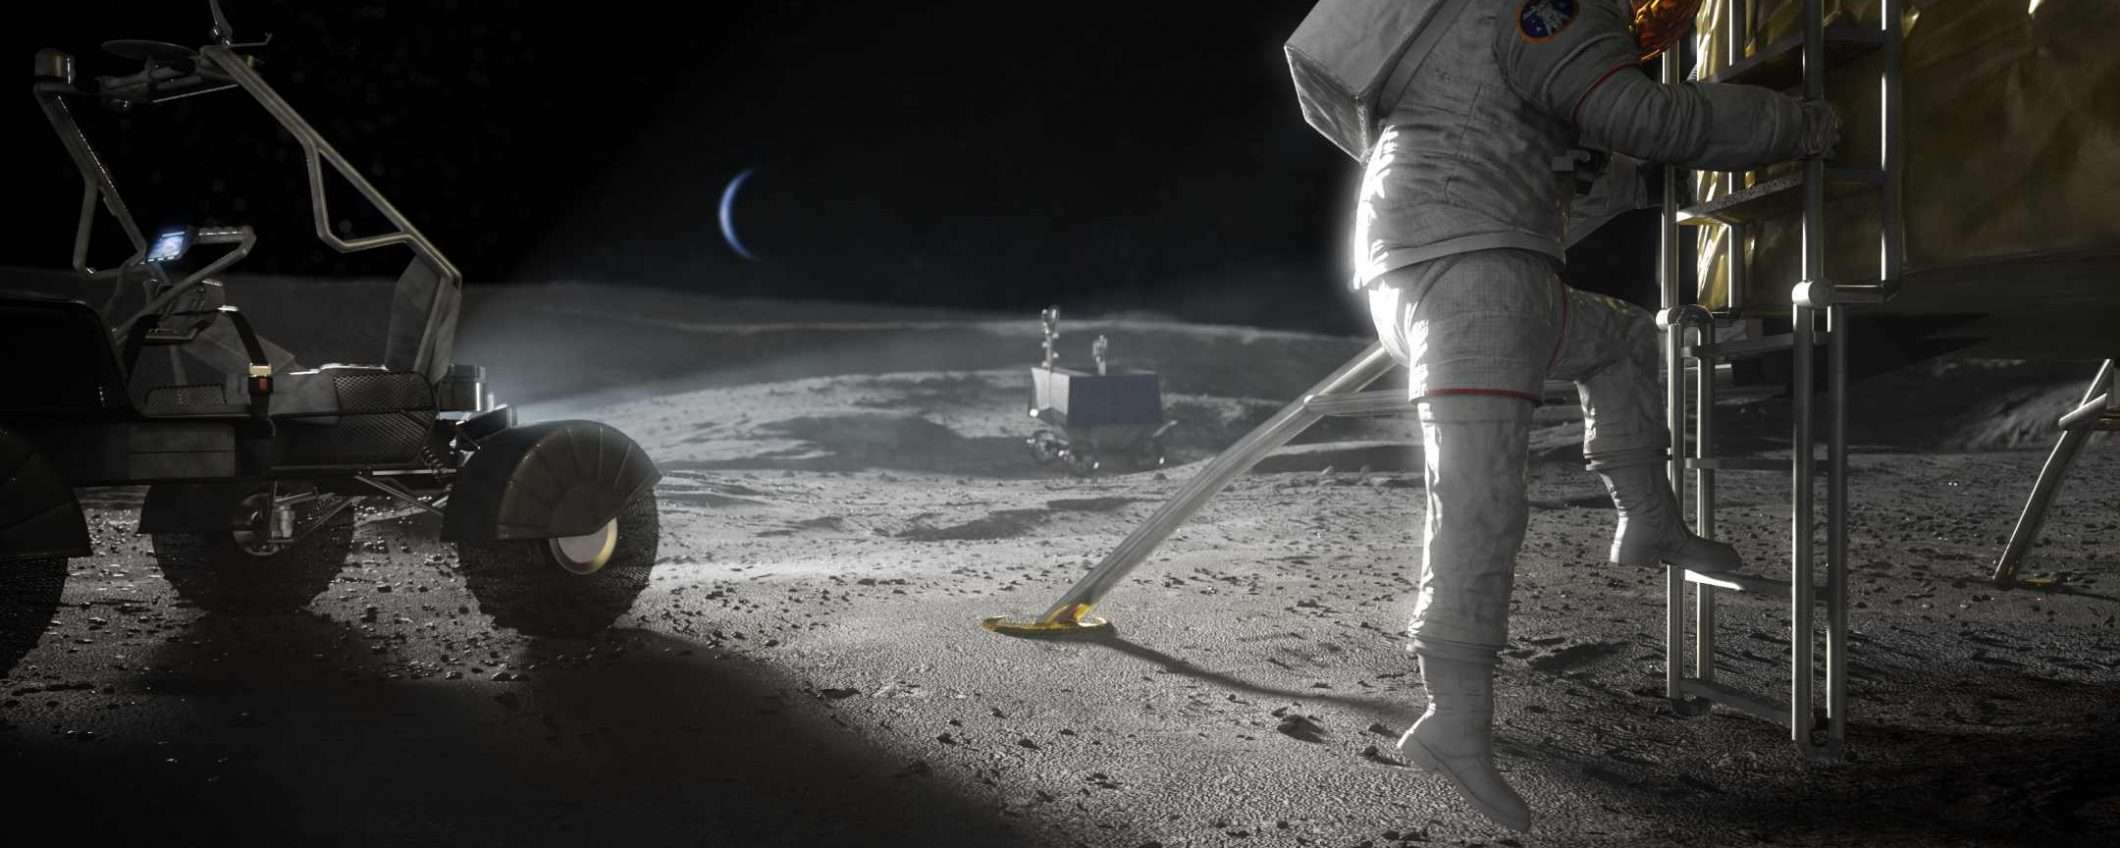 Programma Artemis: 5 aziende per i lander lunari